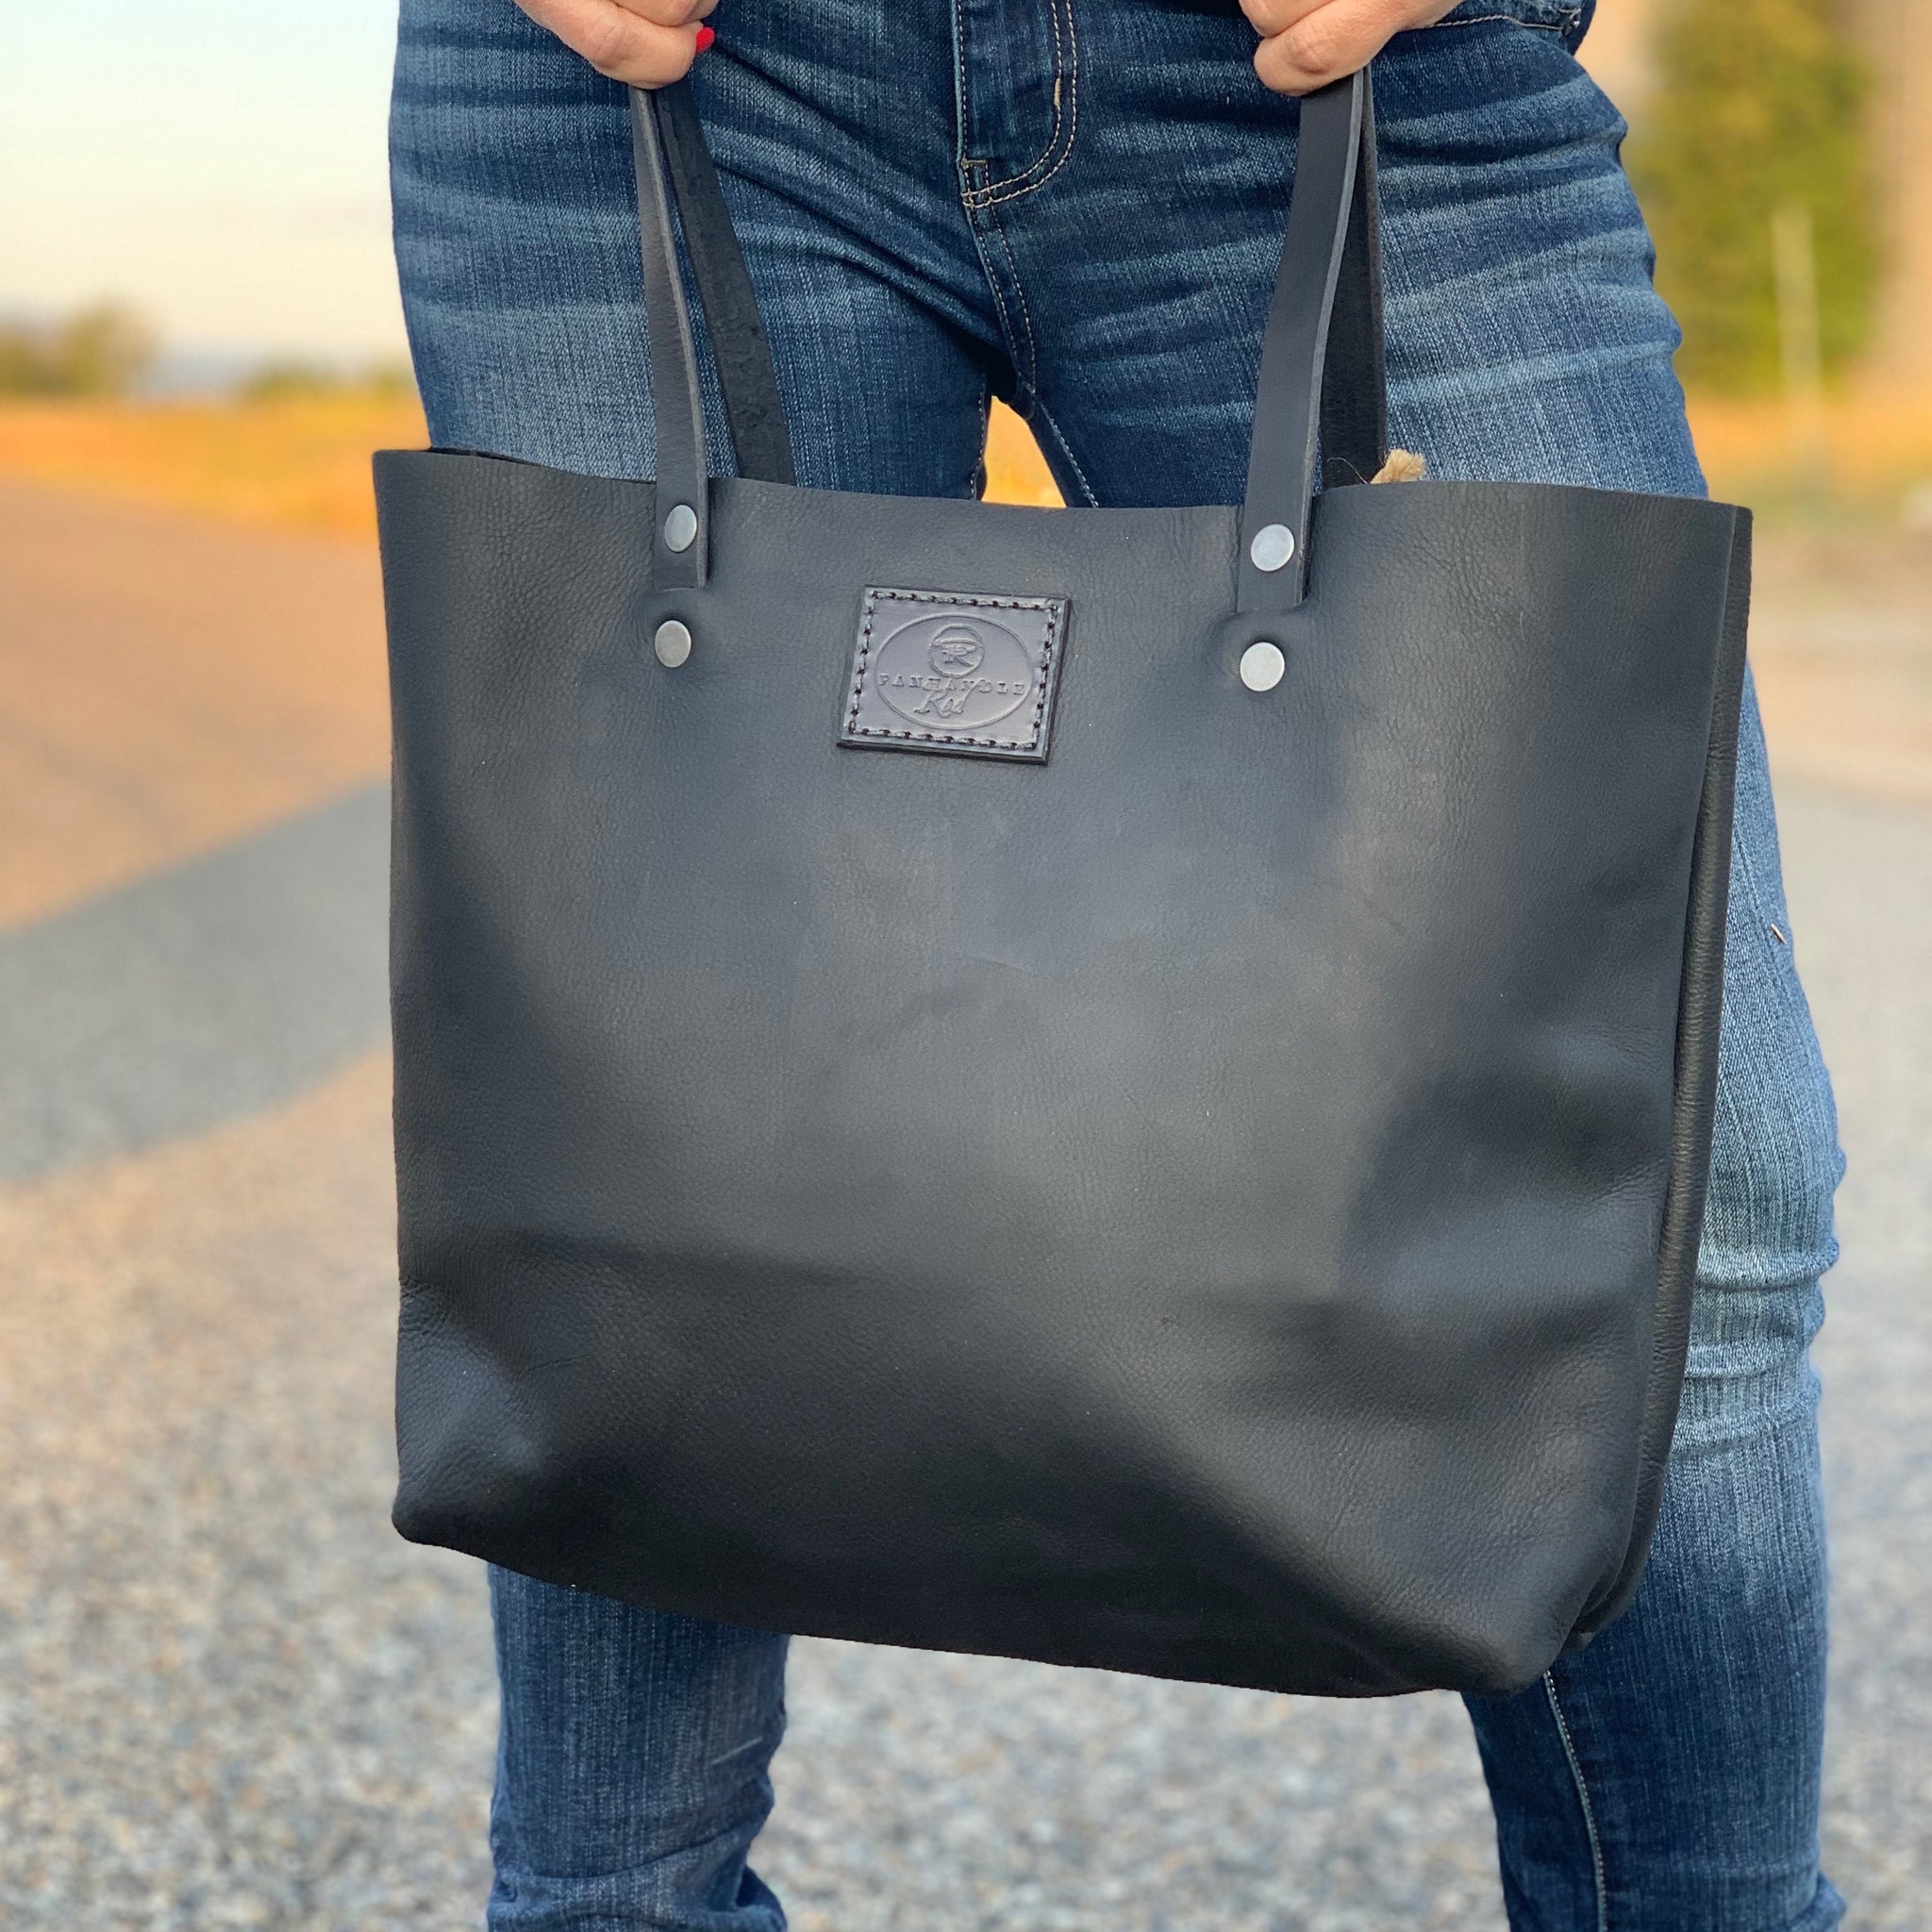 Buy Grey Ladies Shoulder Bag 12 Inch Online at Best Prices